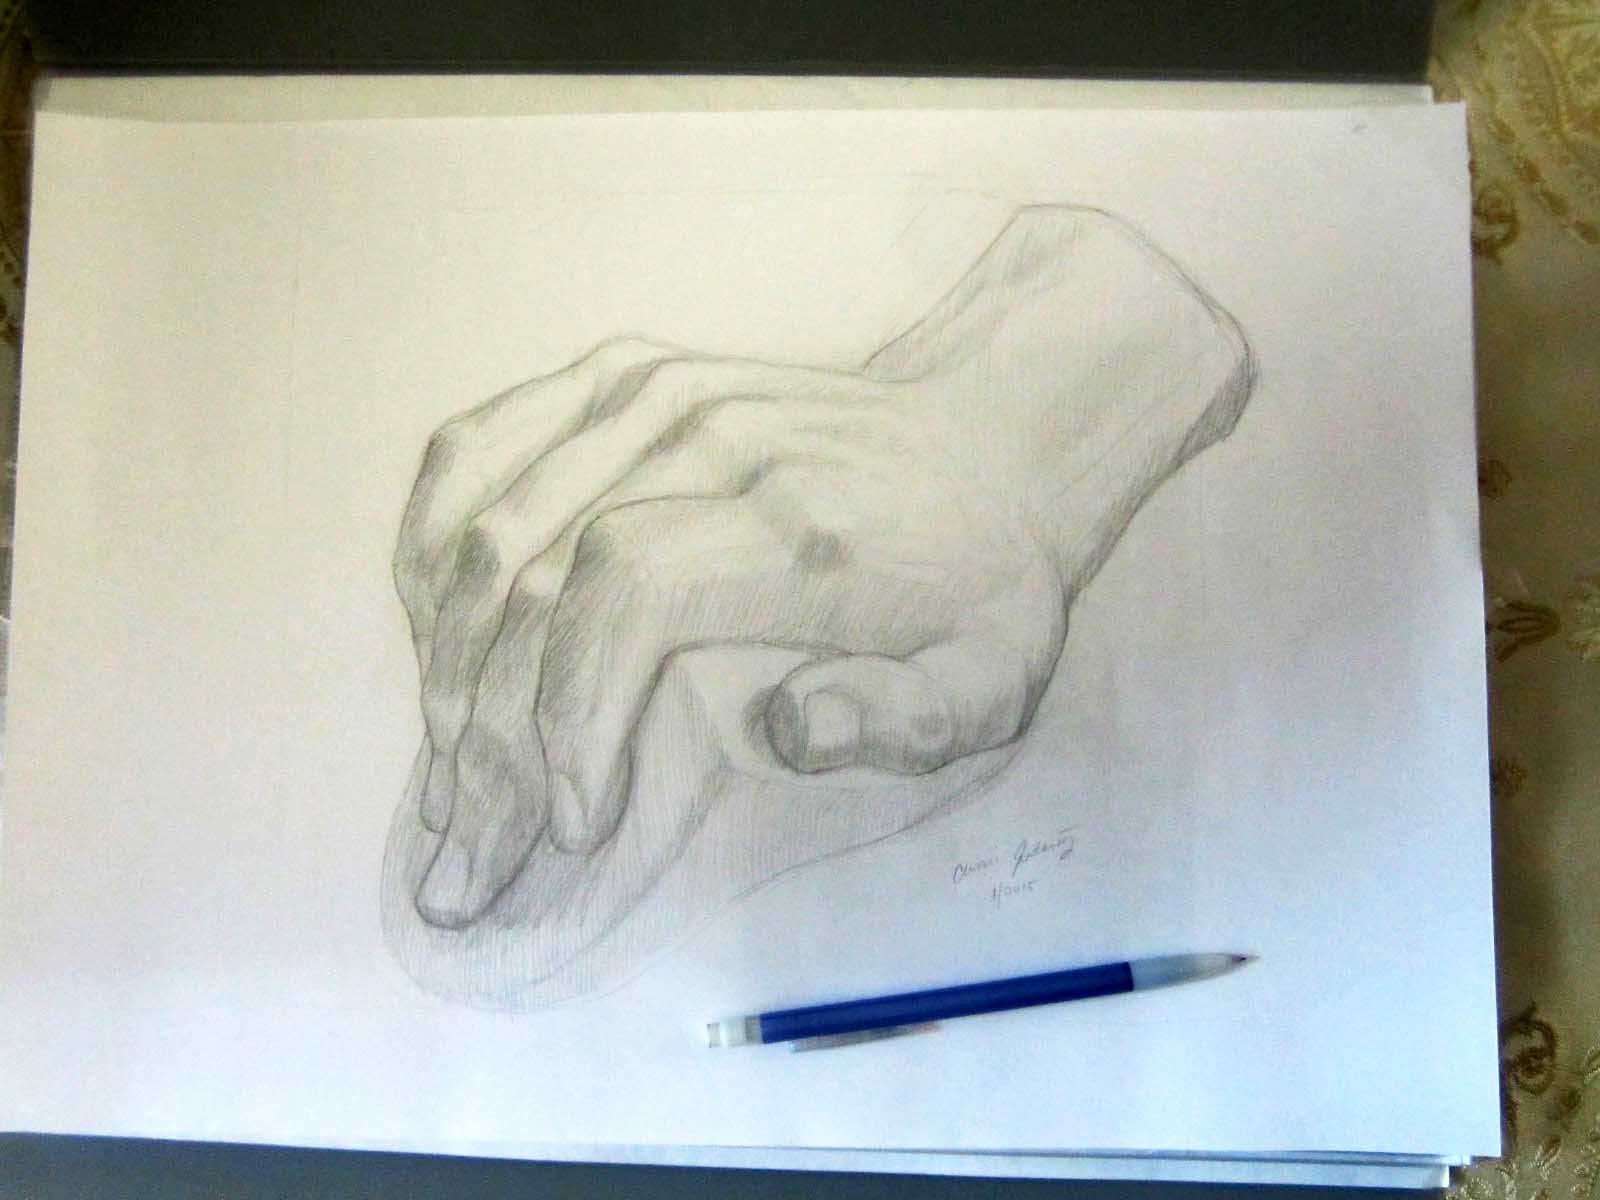 Hand study